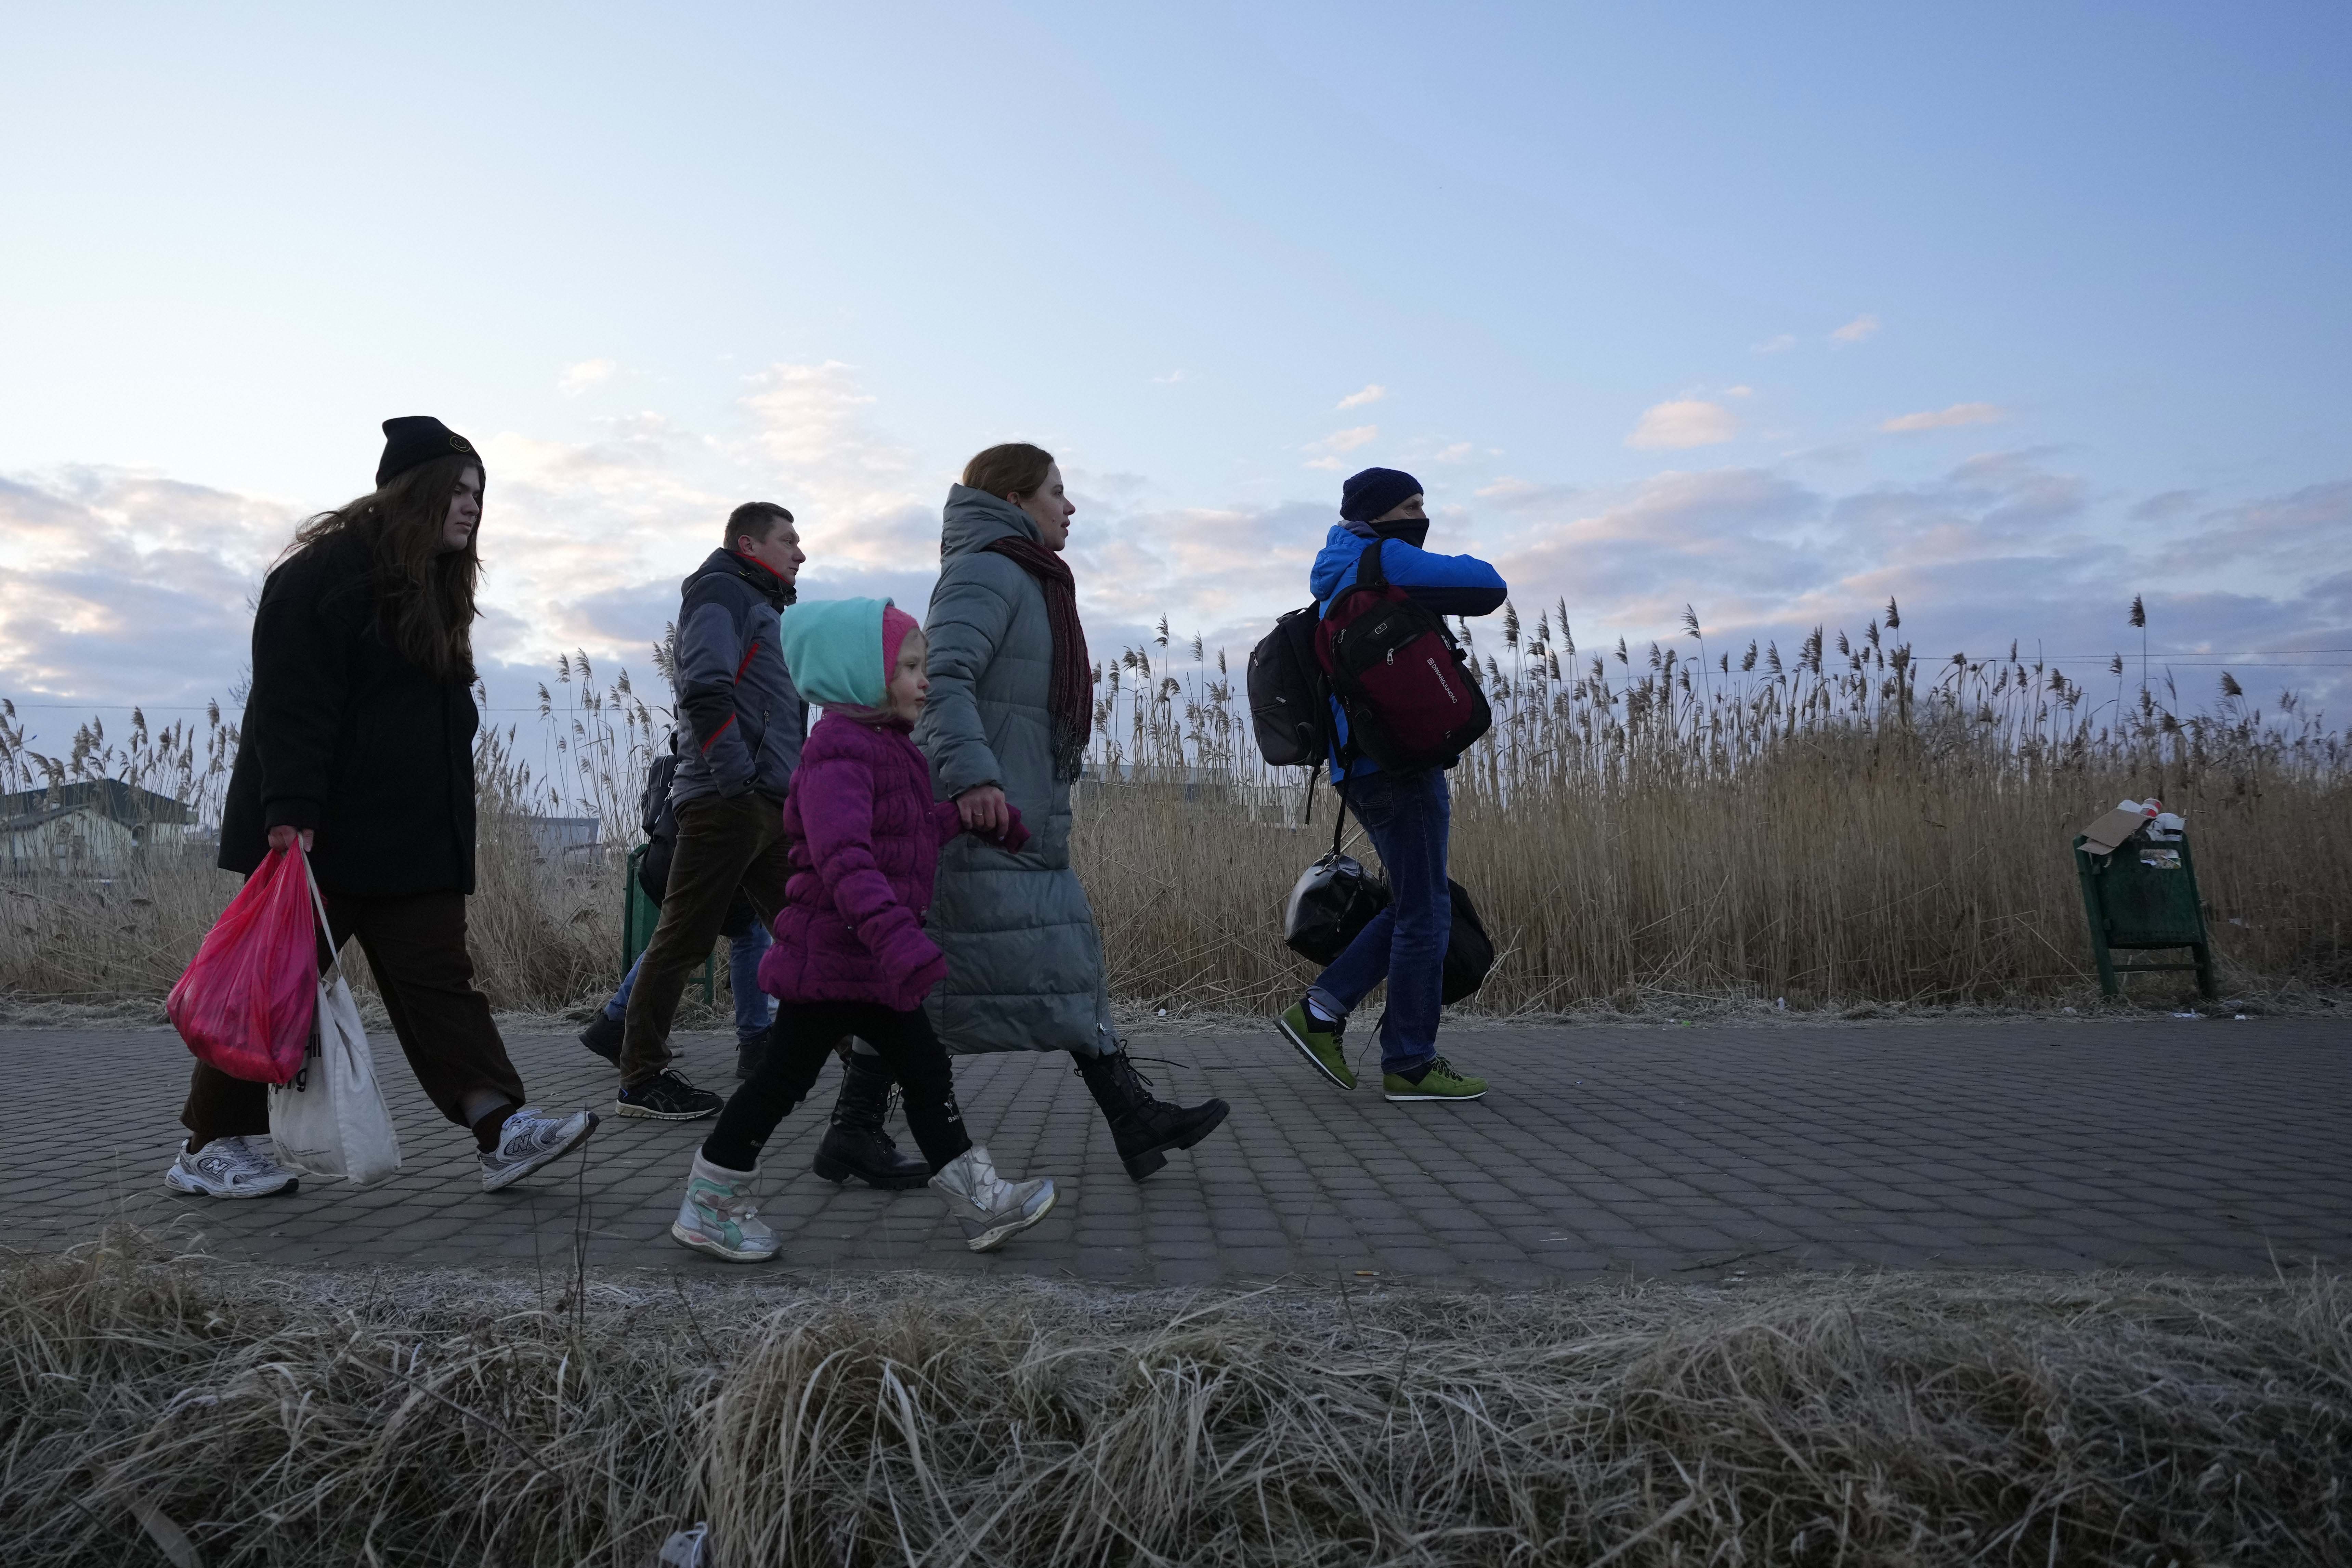 Refugees fleeing conflict in Ukraine arrive to Przemysl, Poland, Feb. 27, 2022. Pic/PTI